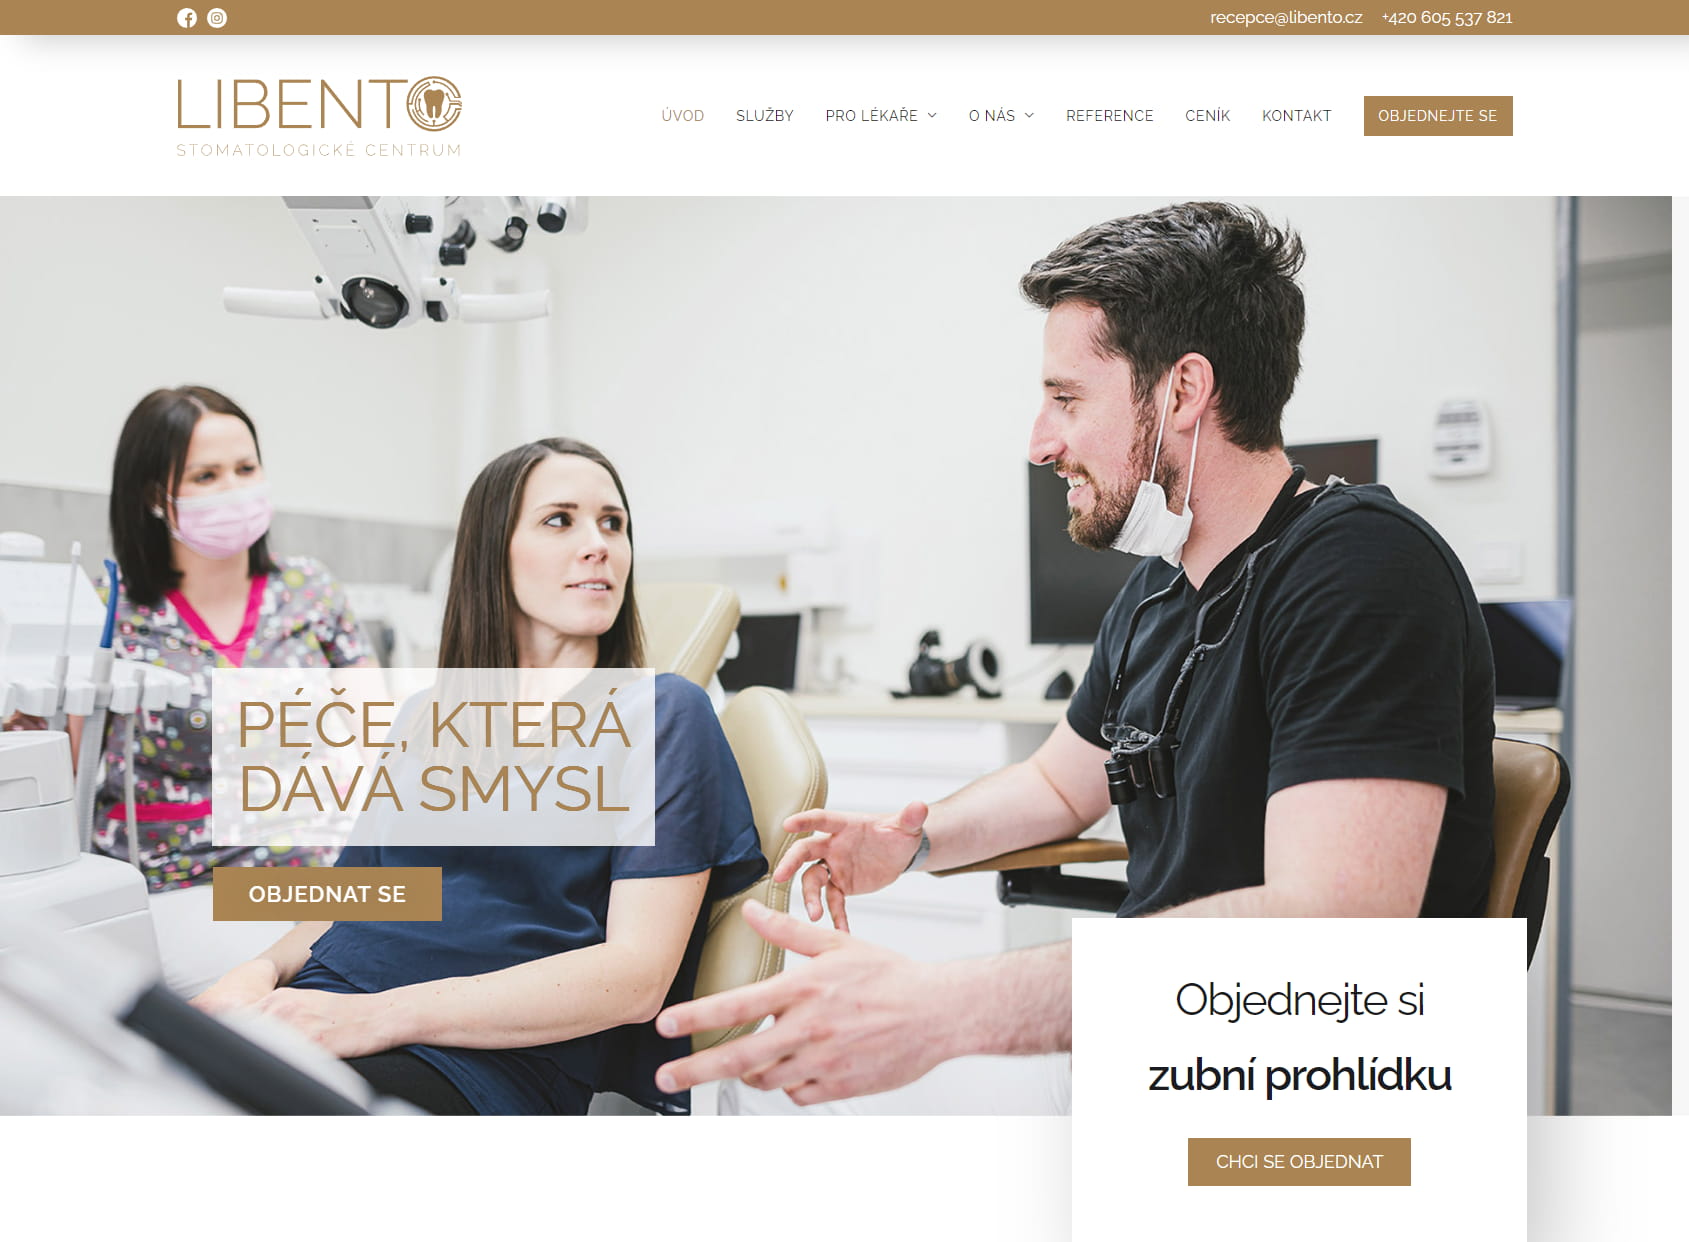 LIBENTO Dental Clinic